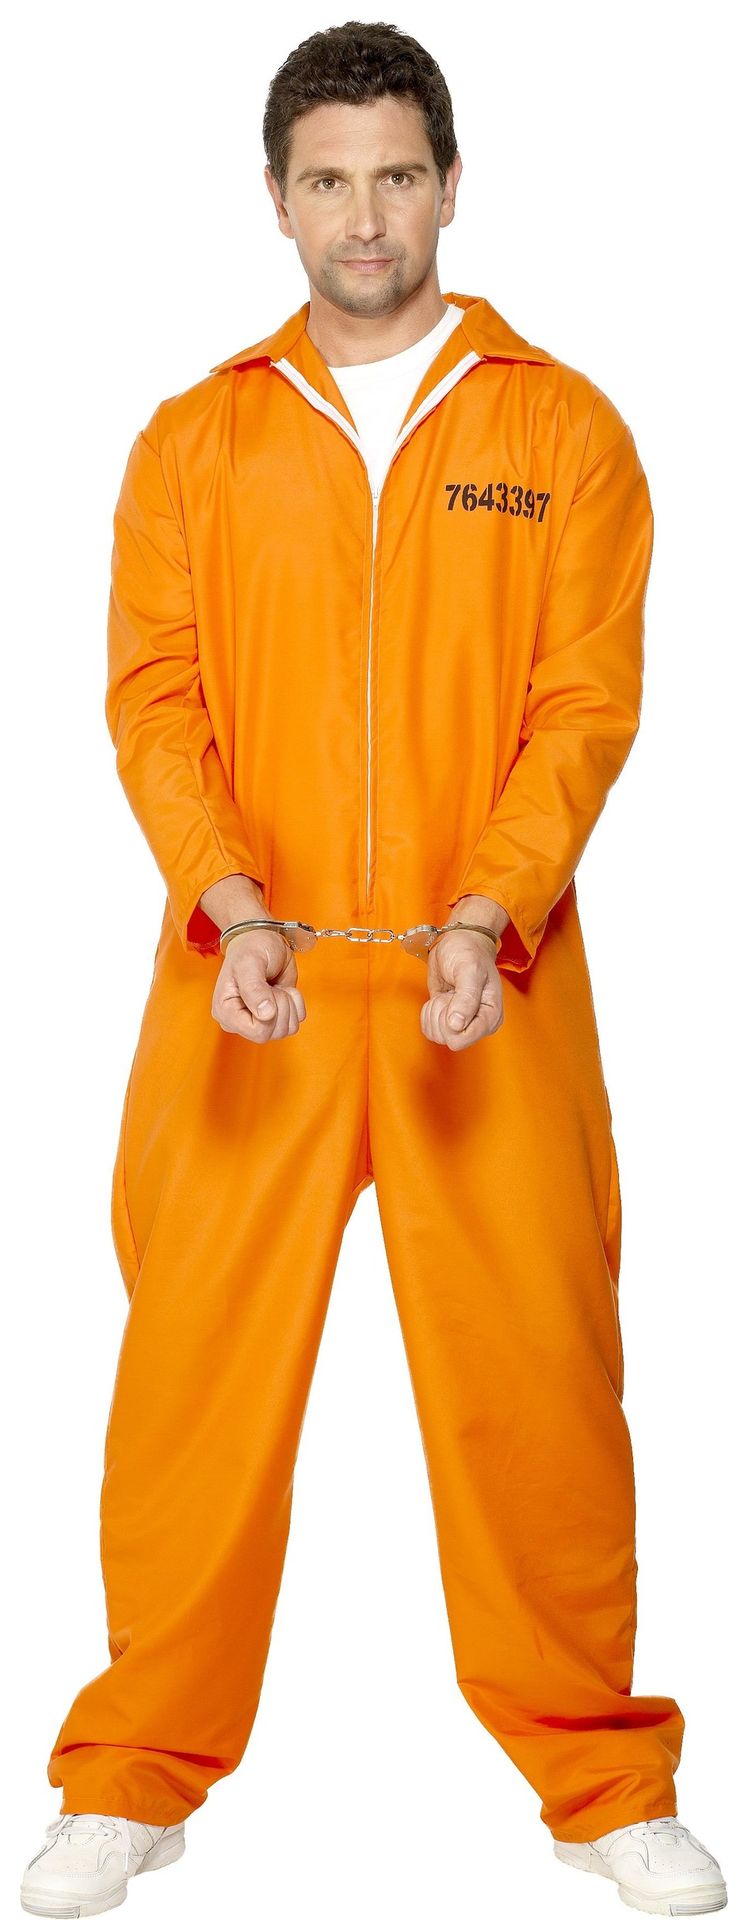 Oranje gevangenis kostuum man